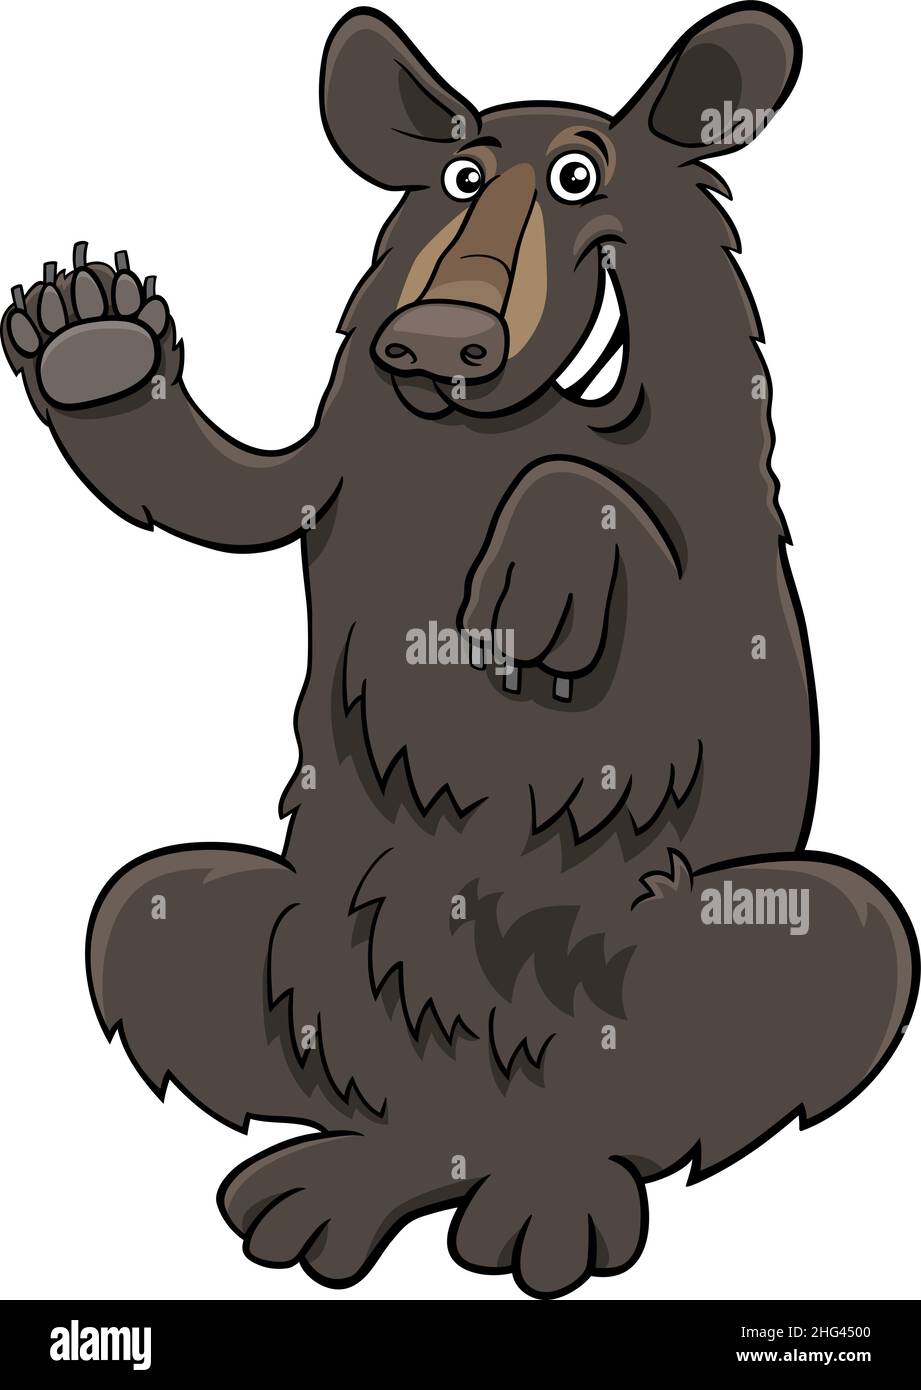 https://c8.alamy.com/comp/2HG4500/cartoon-illustration-of-american-black-bear-or-baribal-animal-character-2HG4500.jpg